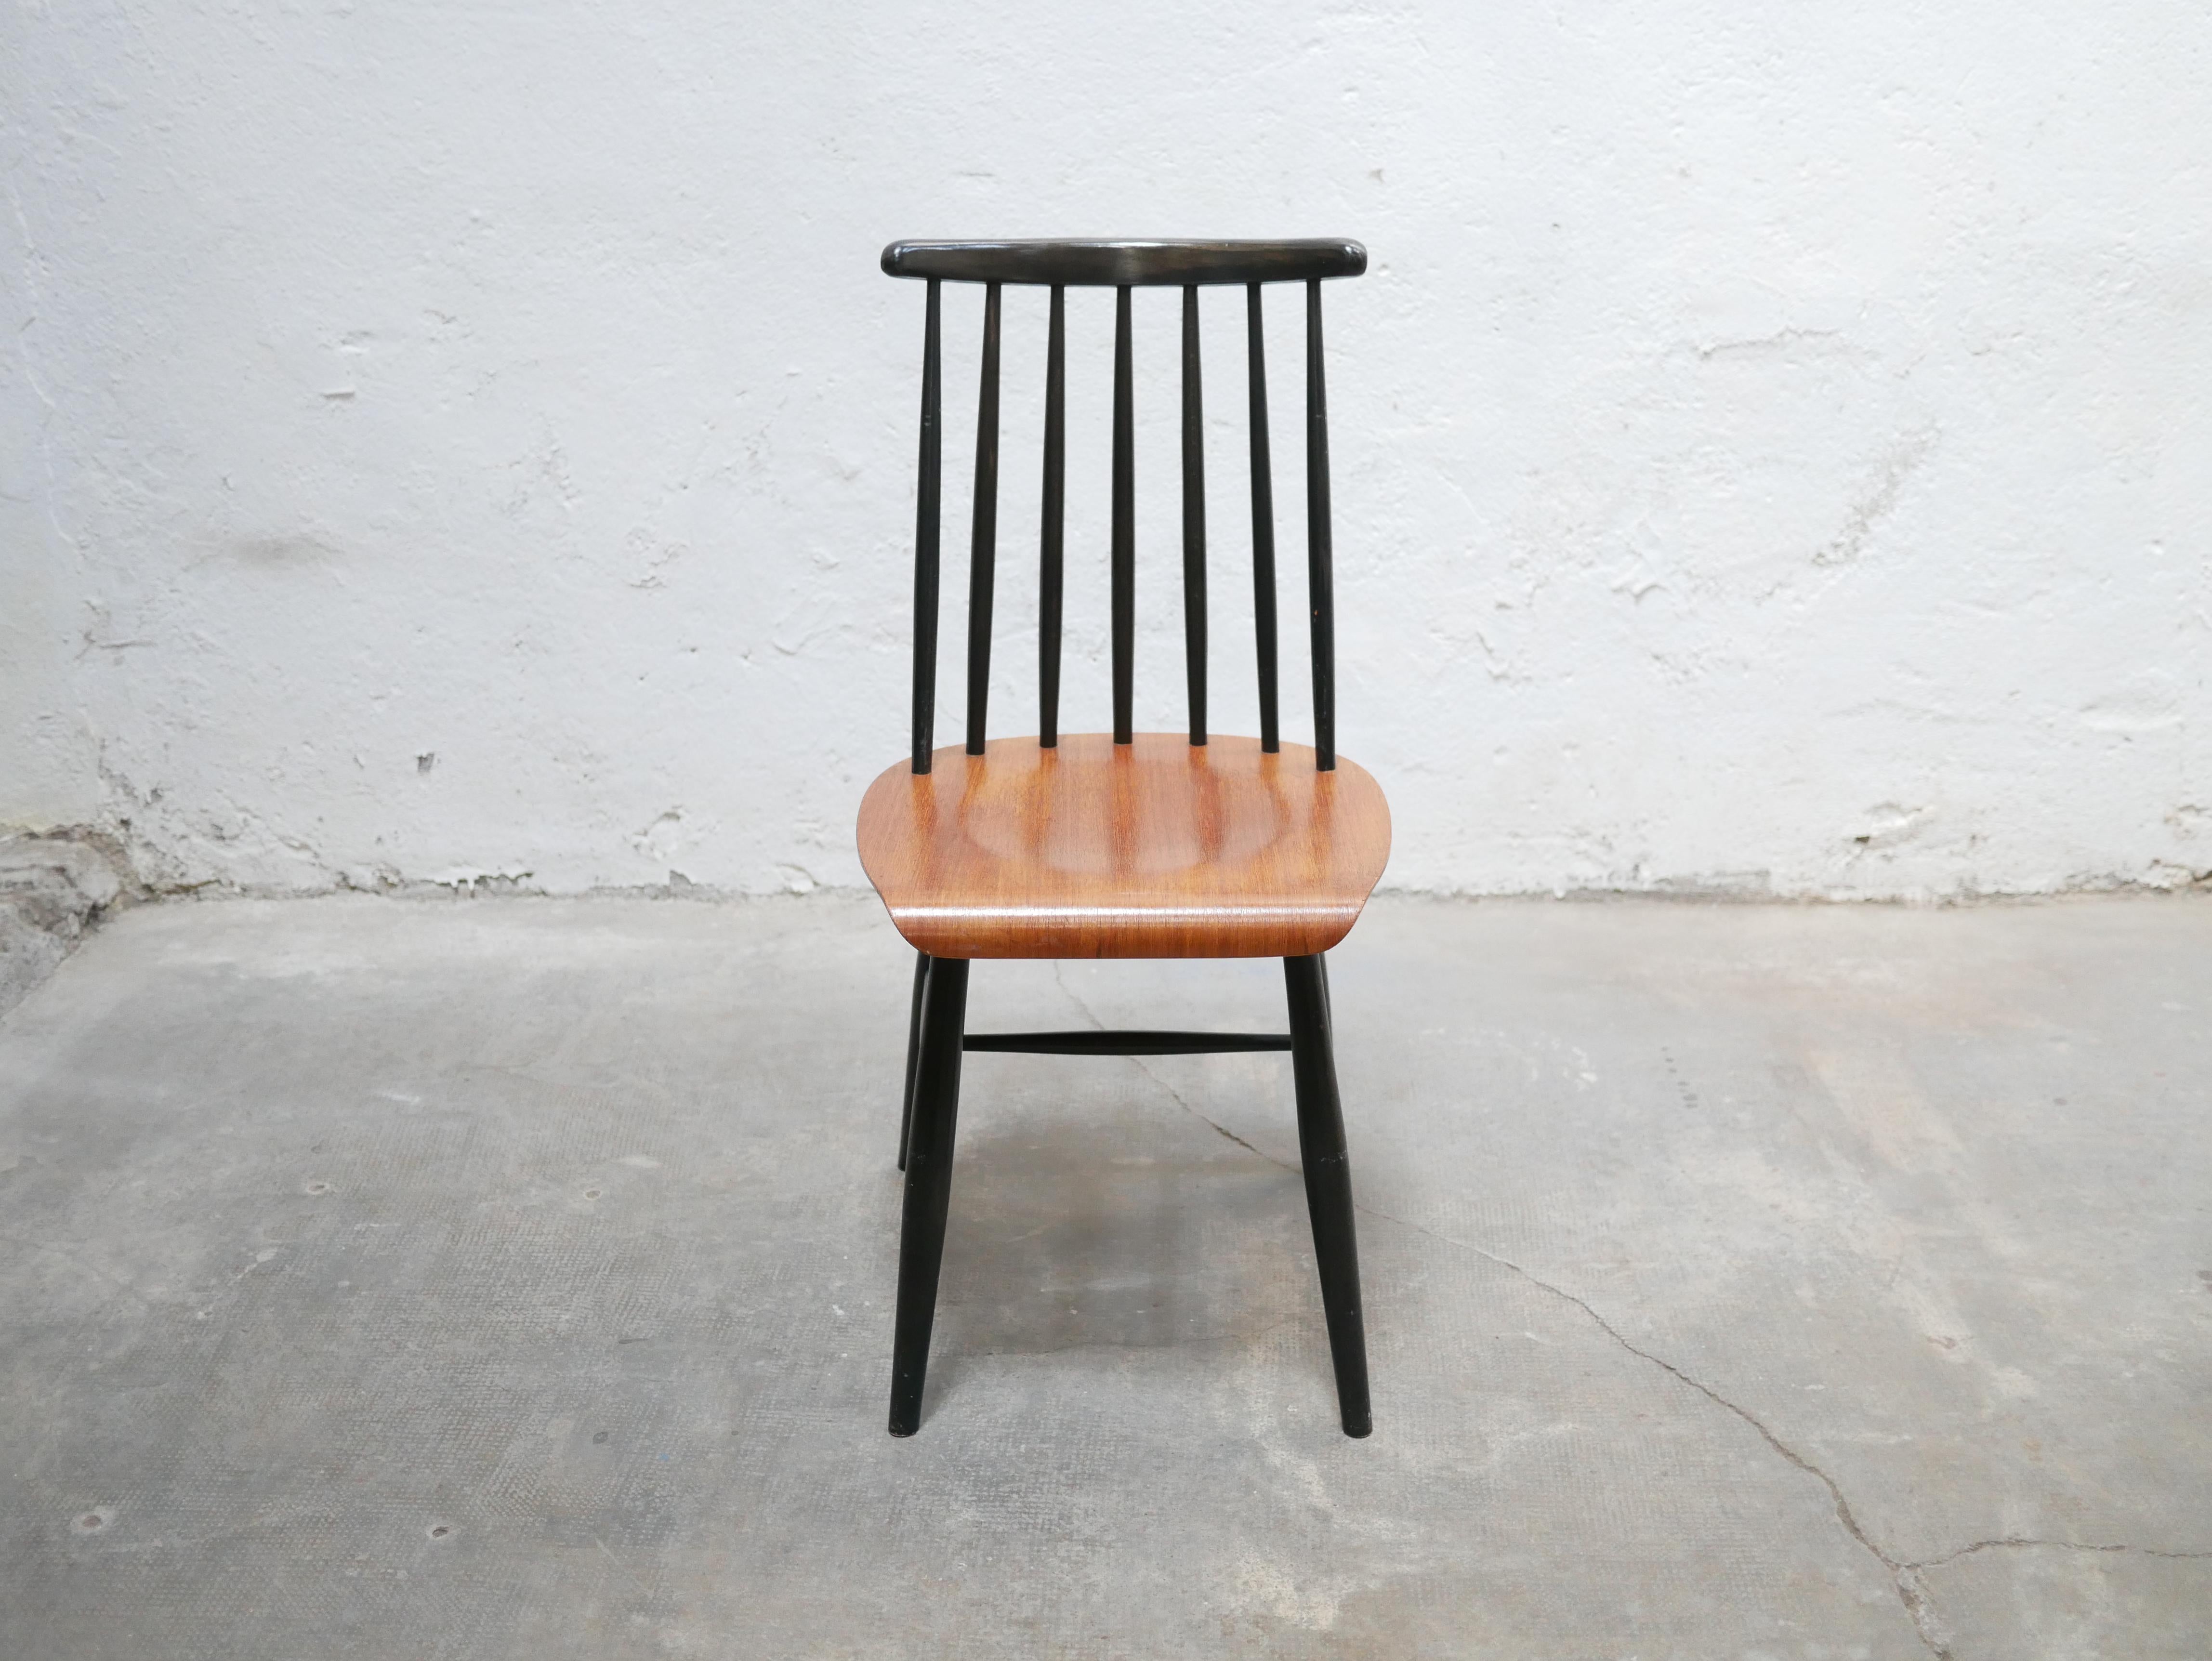 Vintage Scandinavian chair by I.Tapiovaara model Fanett 11